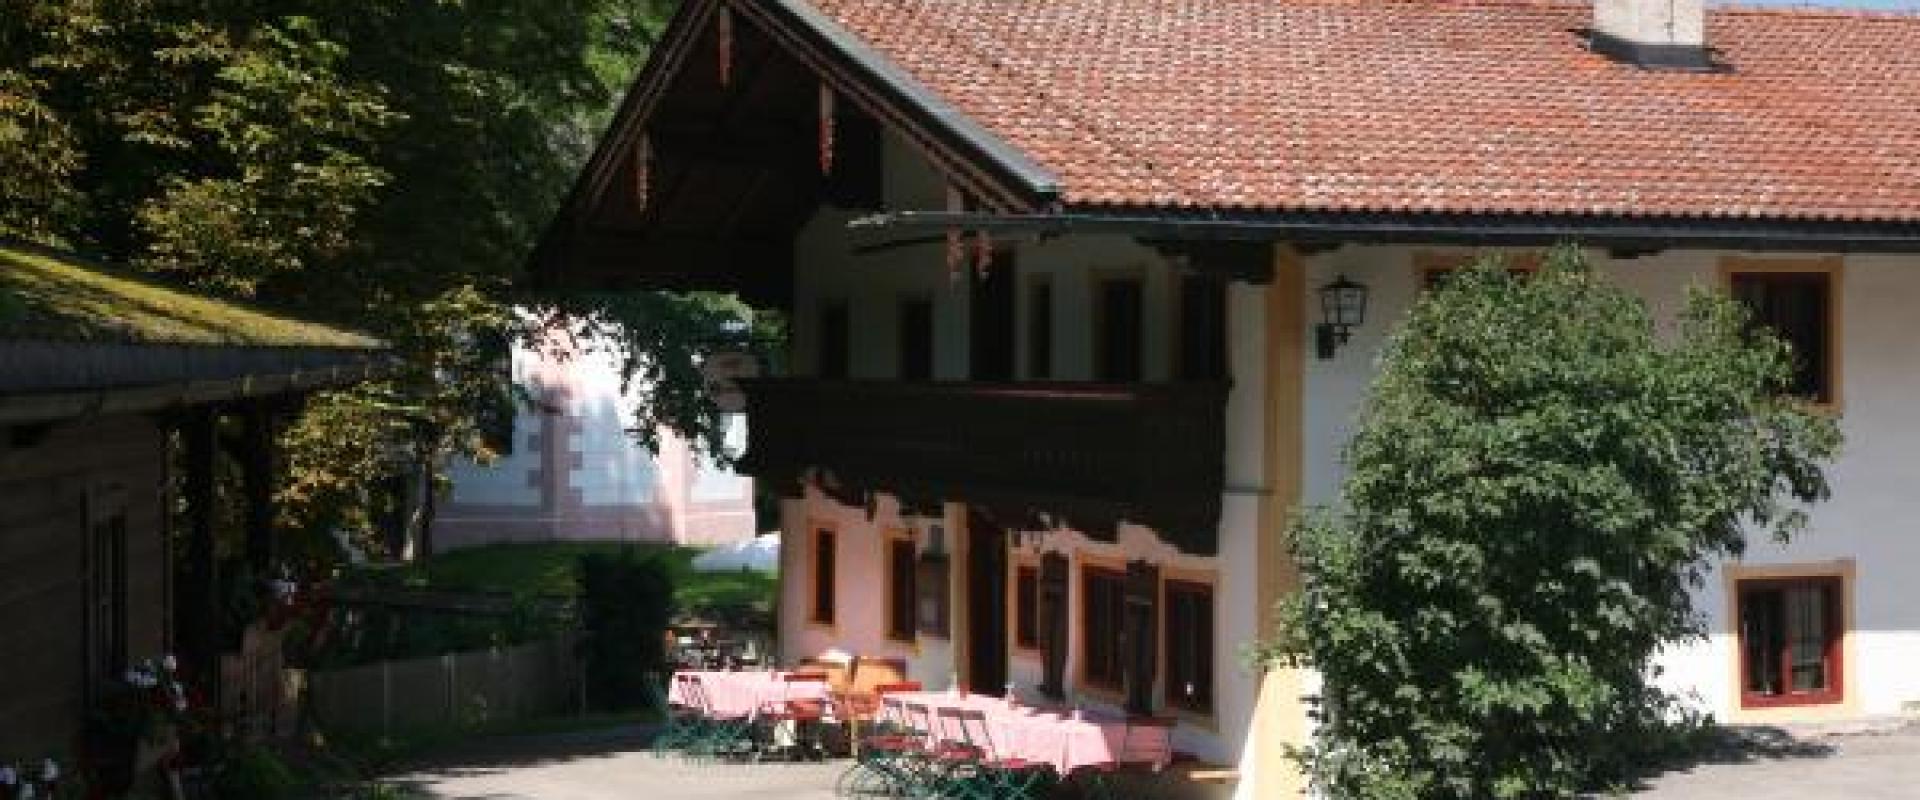 16301 Biker Hotel Zum Mesnerwirt in Oberbayern.jpg